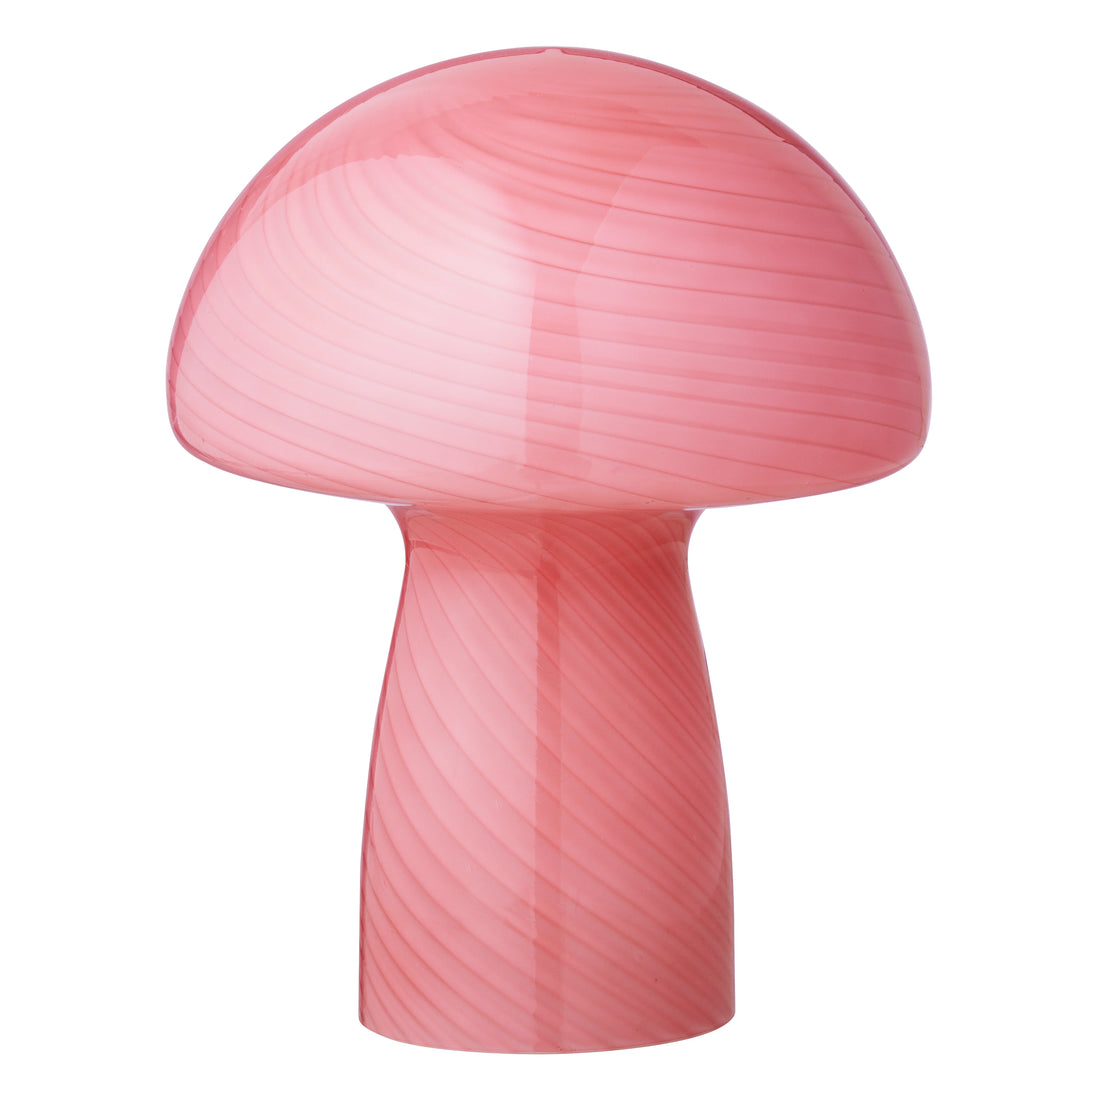 Bahne - fungal lamp - mushroom table lamp, bubble gum - H23 cm.